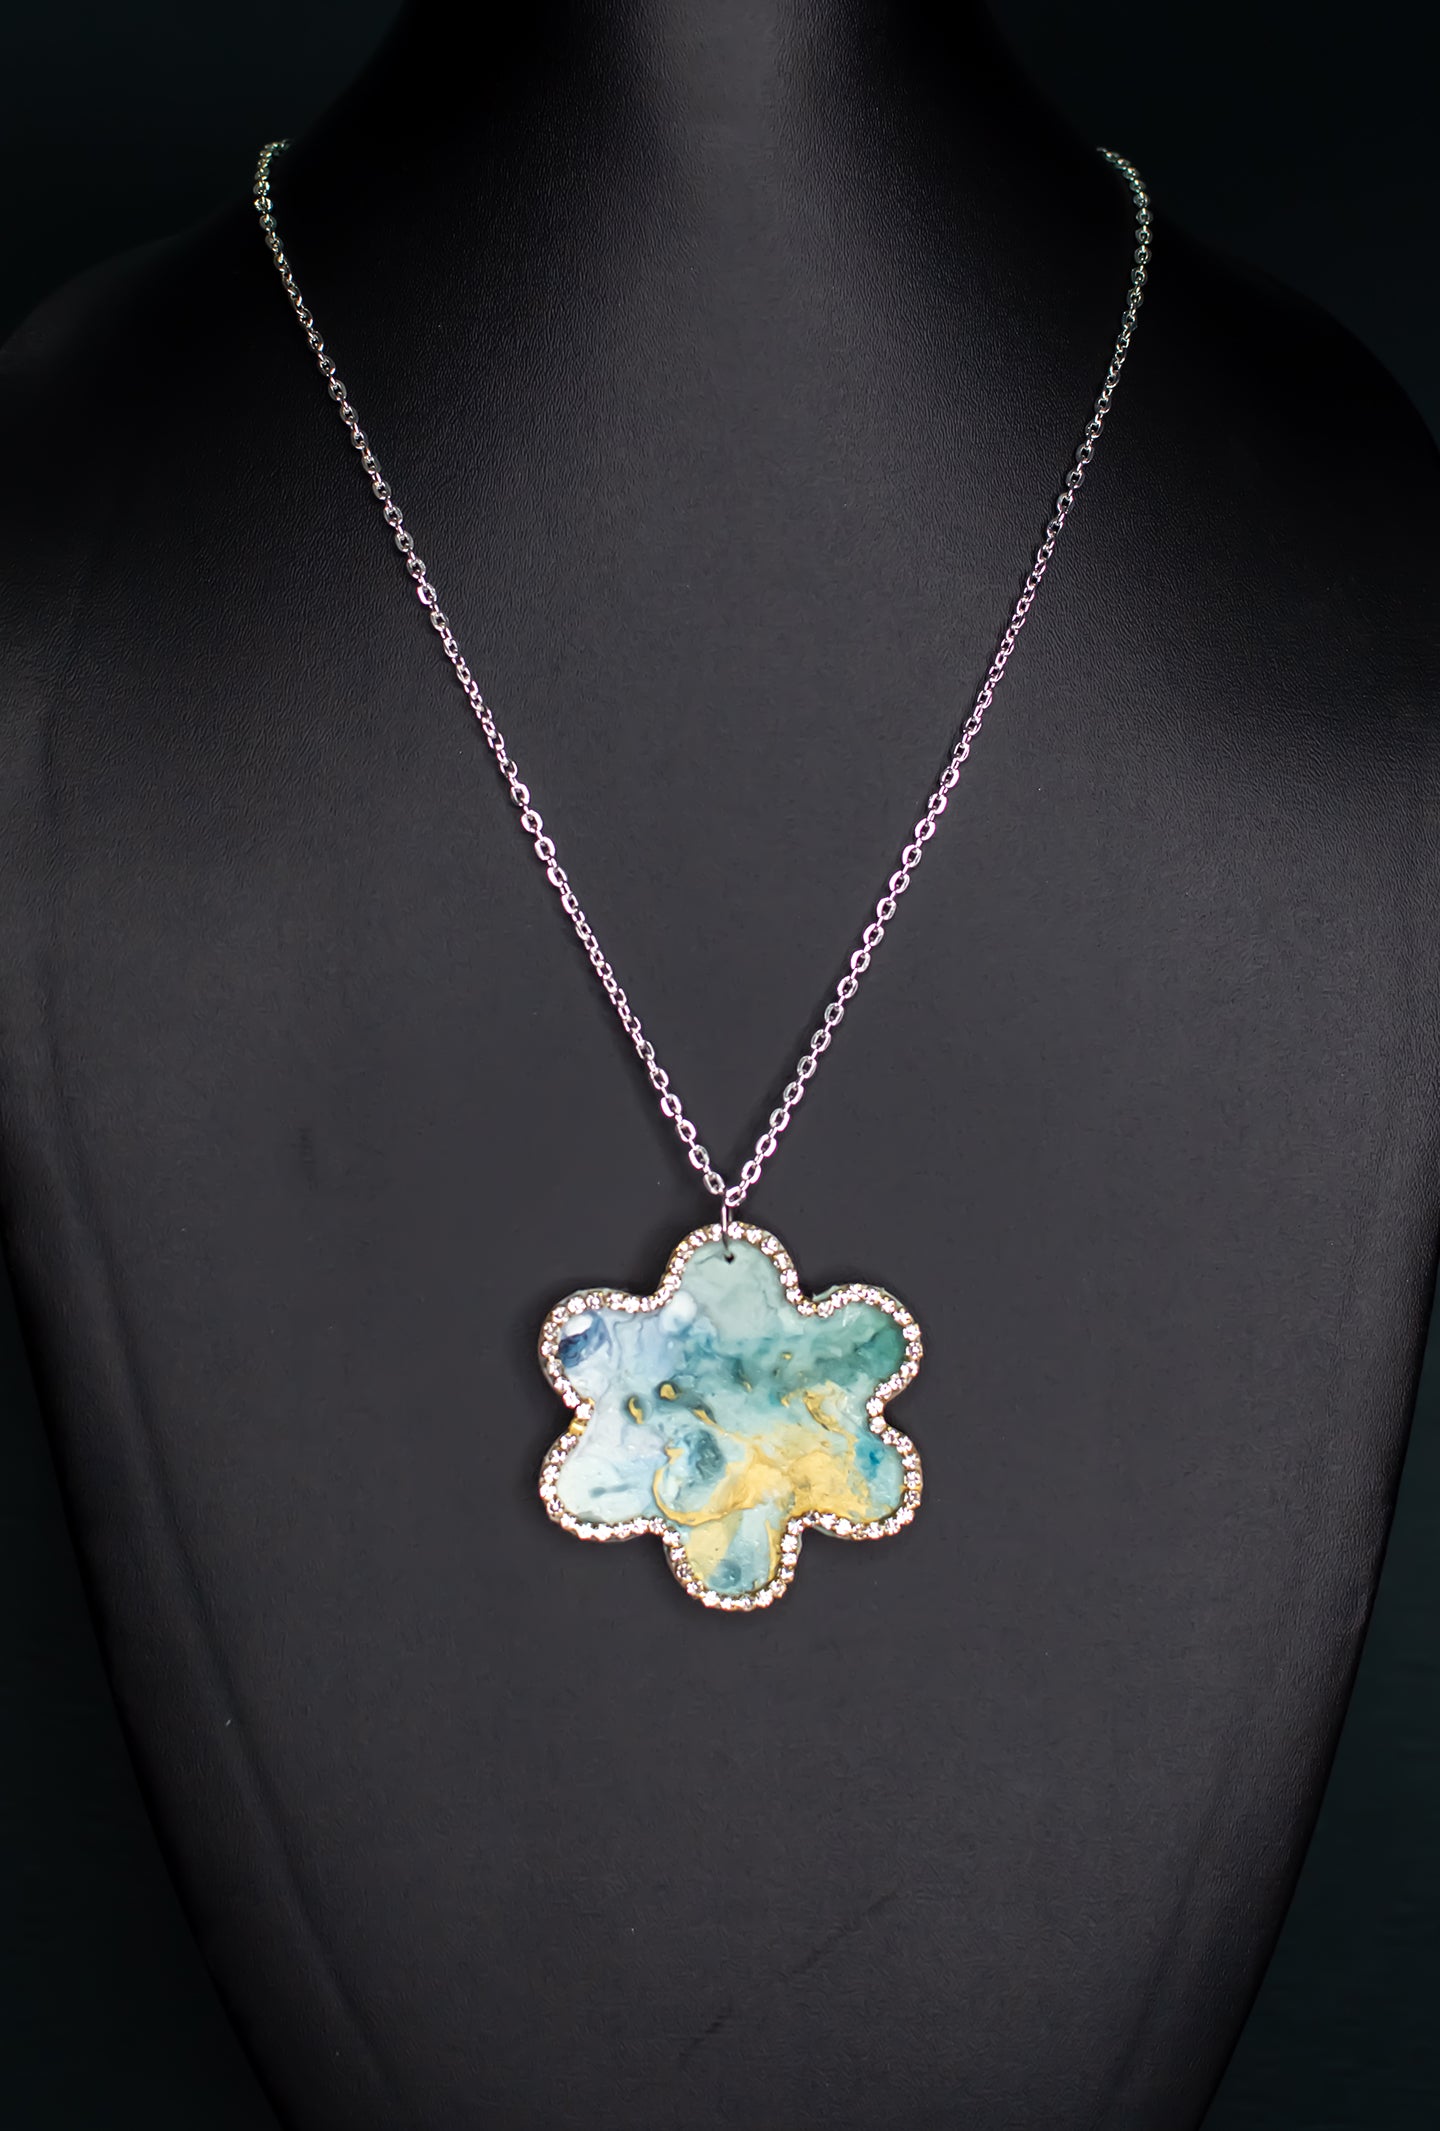 Flower Fluid Necklace : Handmade